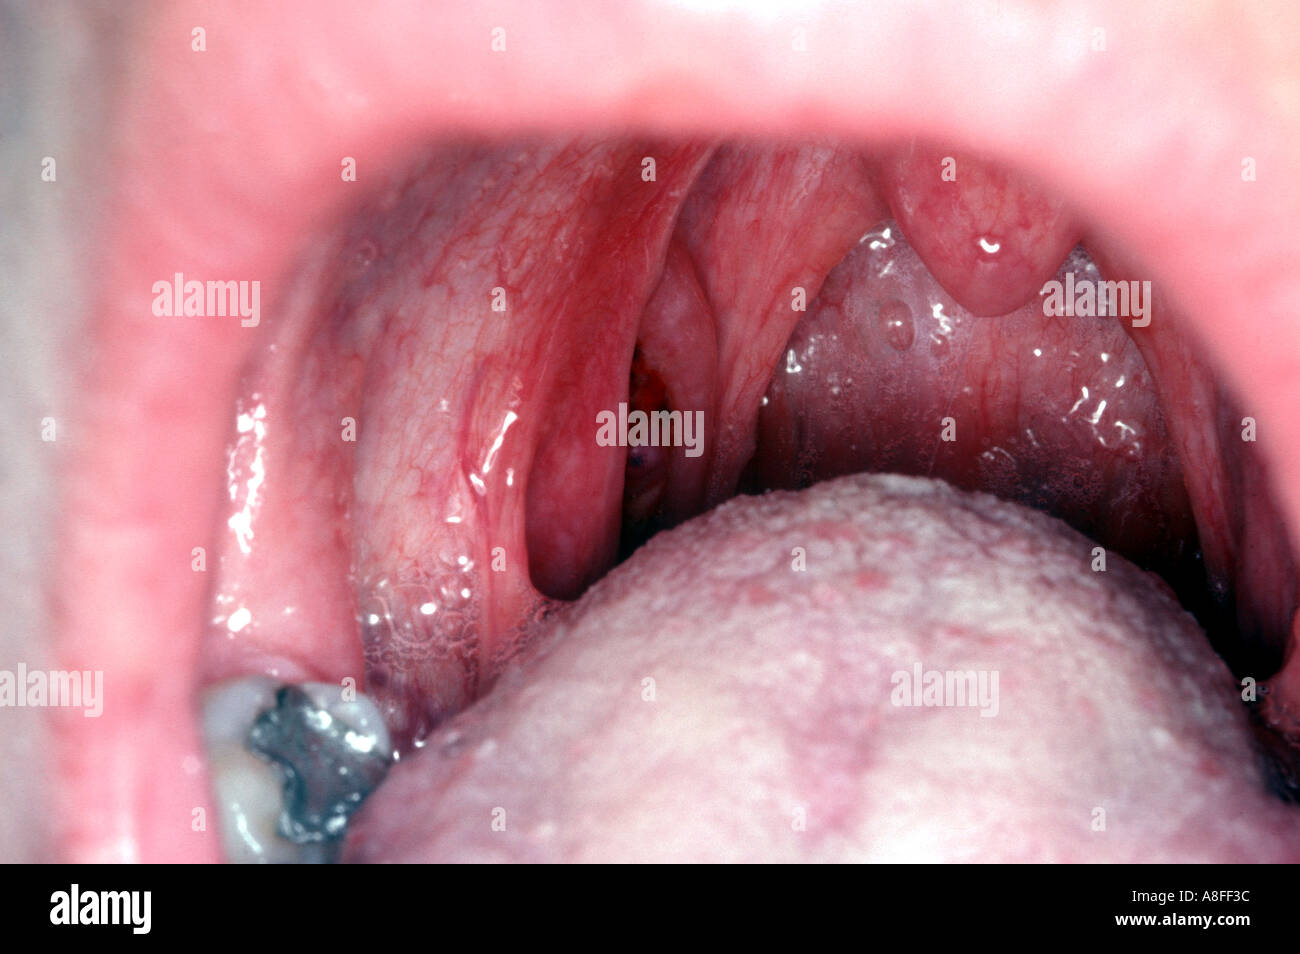 Oral candidiasis Stock Photo